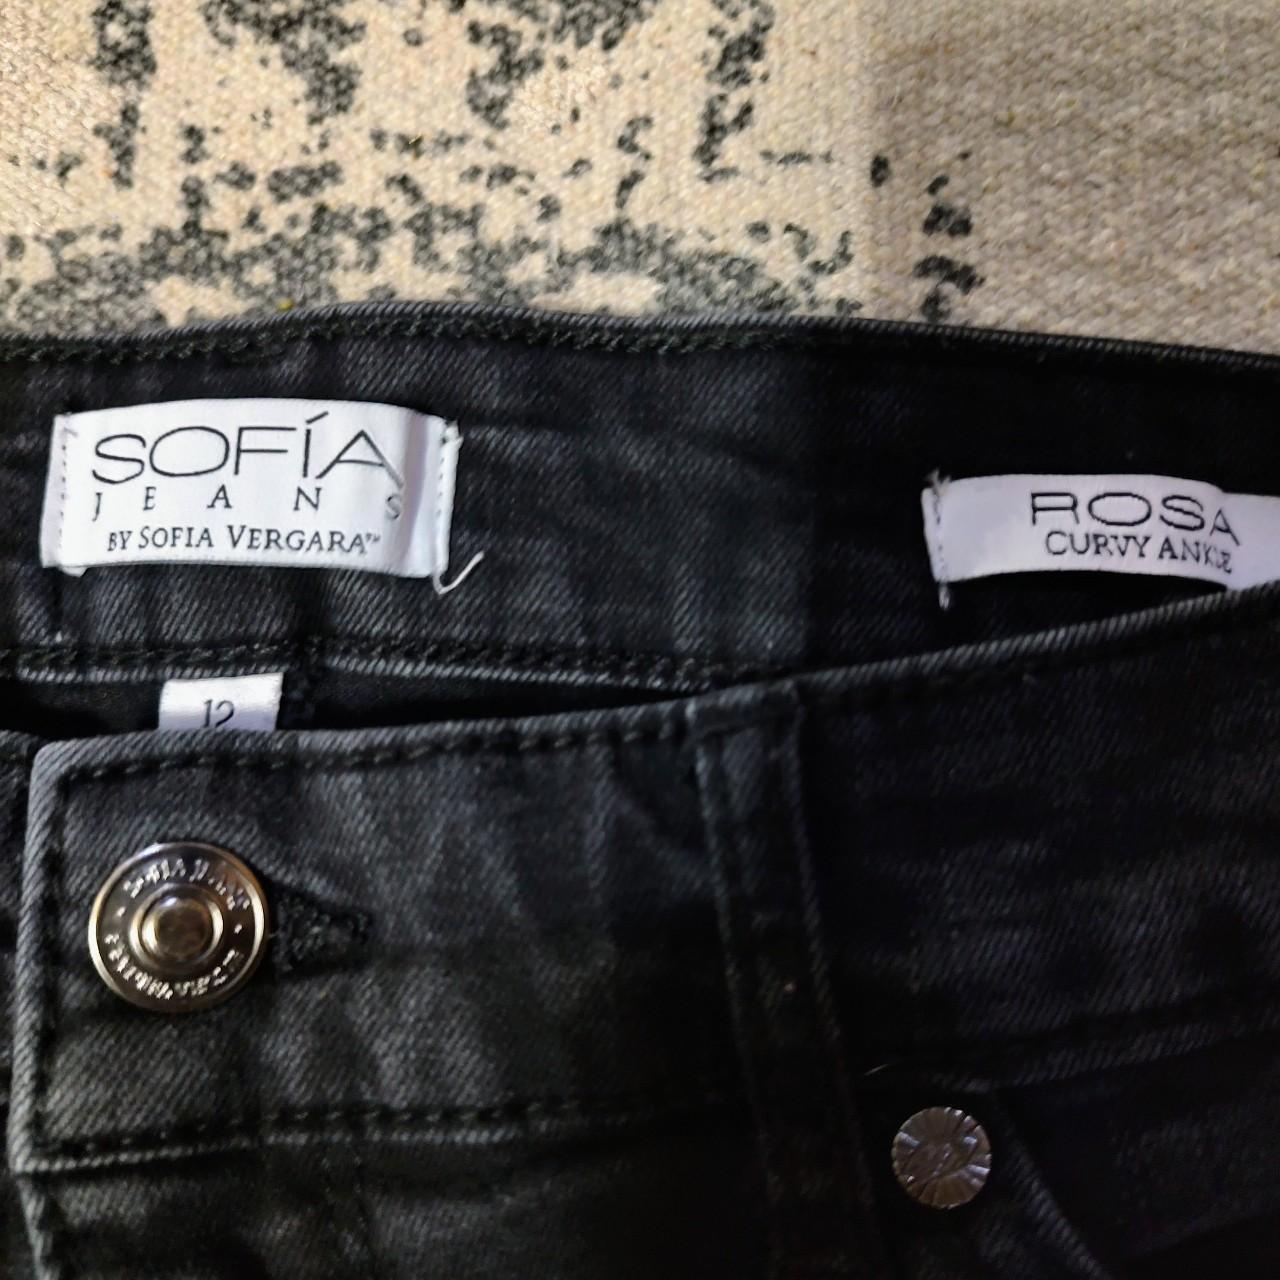 Sofia Jeans by Sofia Vergara “Rosa” Curvy Ankle Jeans- Size 12